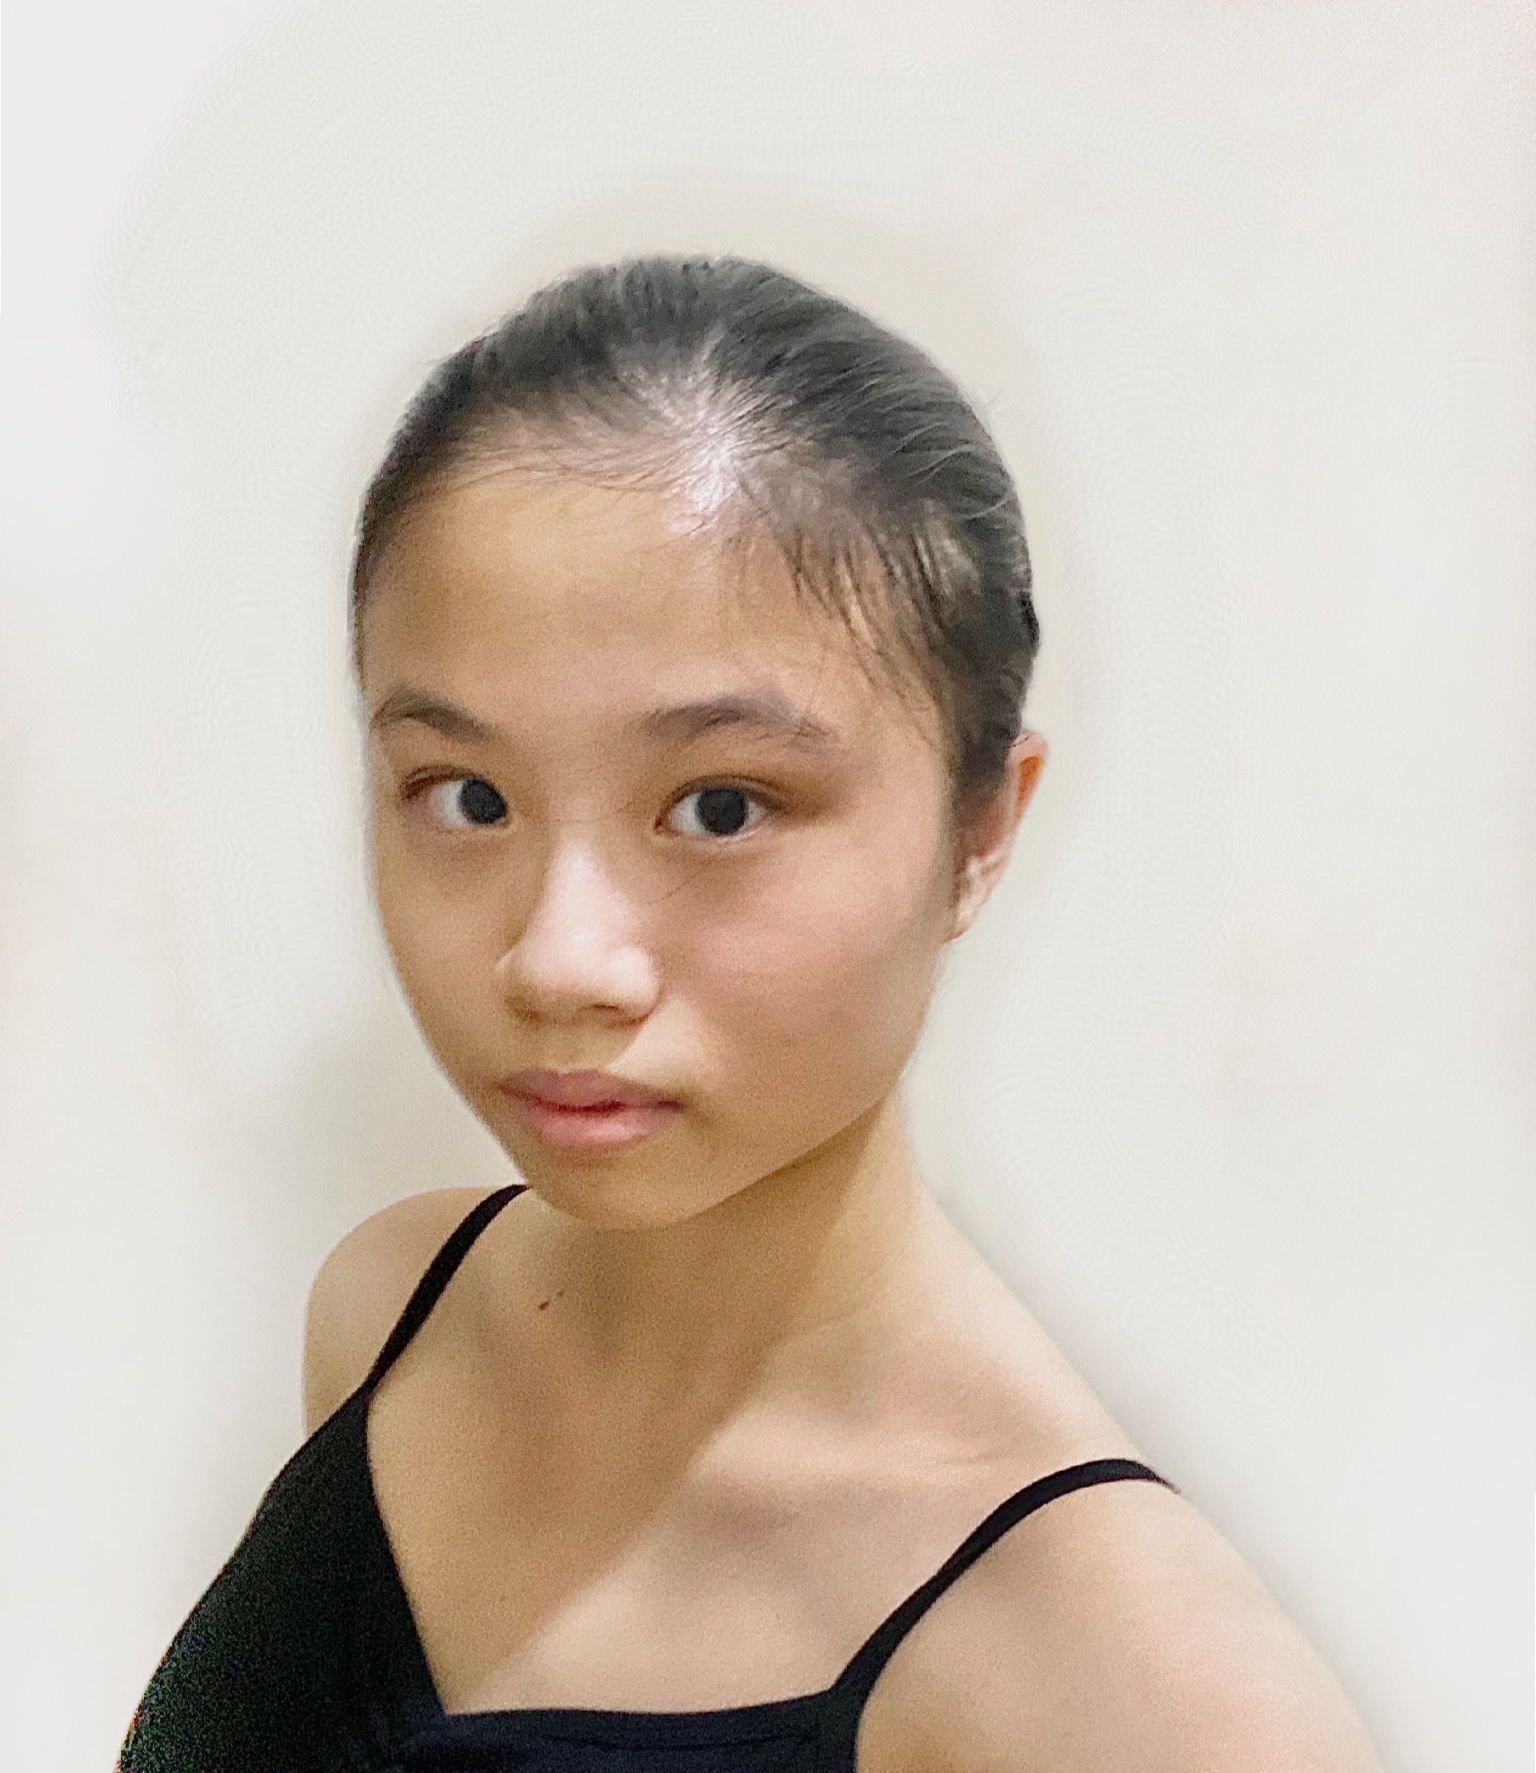 Hei Tong Chan - Student of RMB